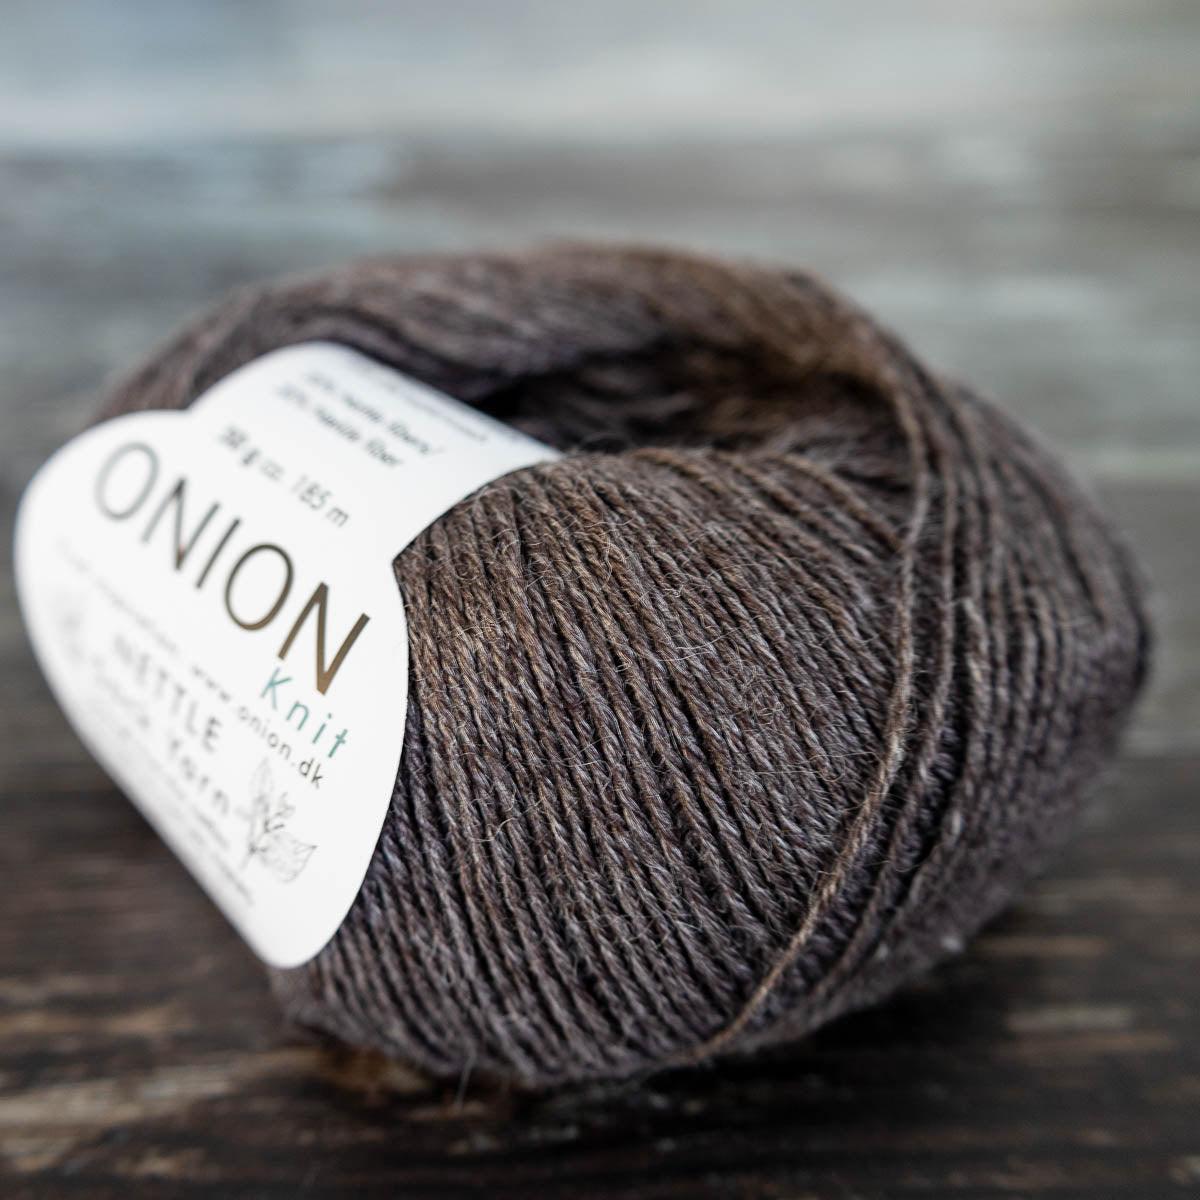 Onion Onion Nettle Sock Yarn - 1034 choko brun - Yarn